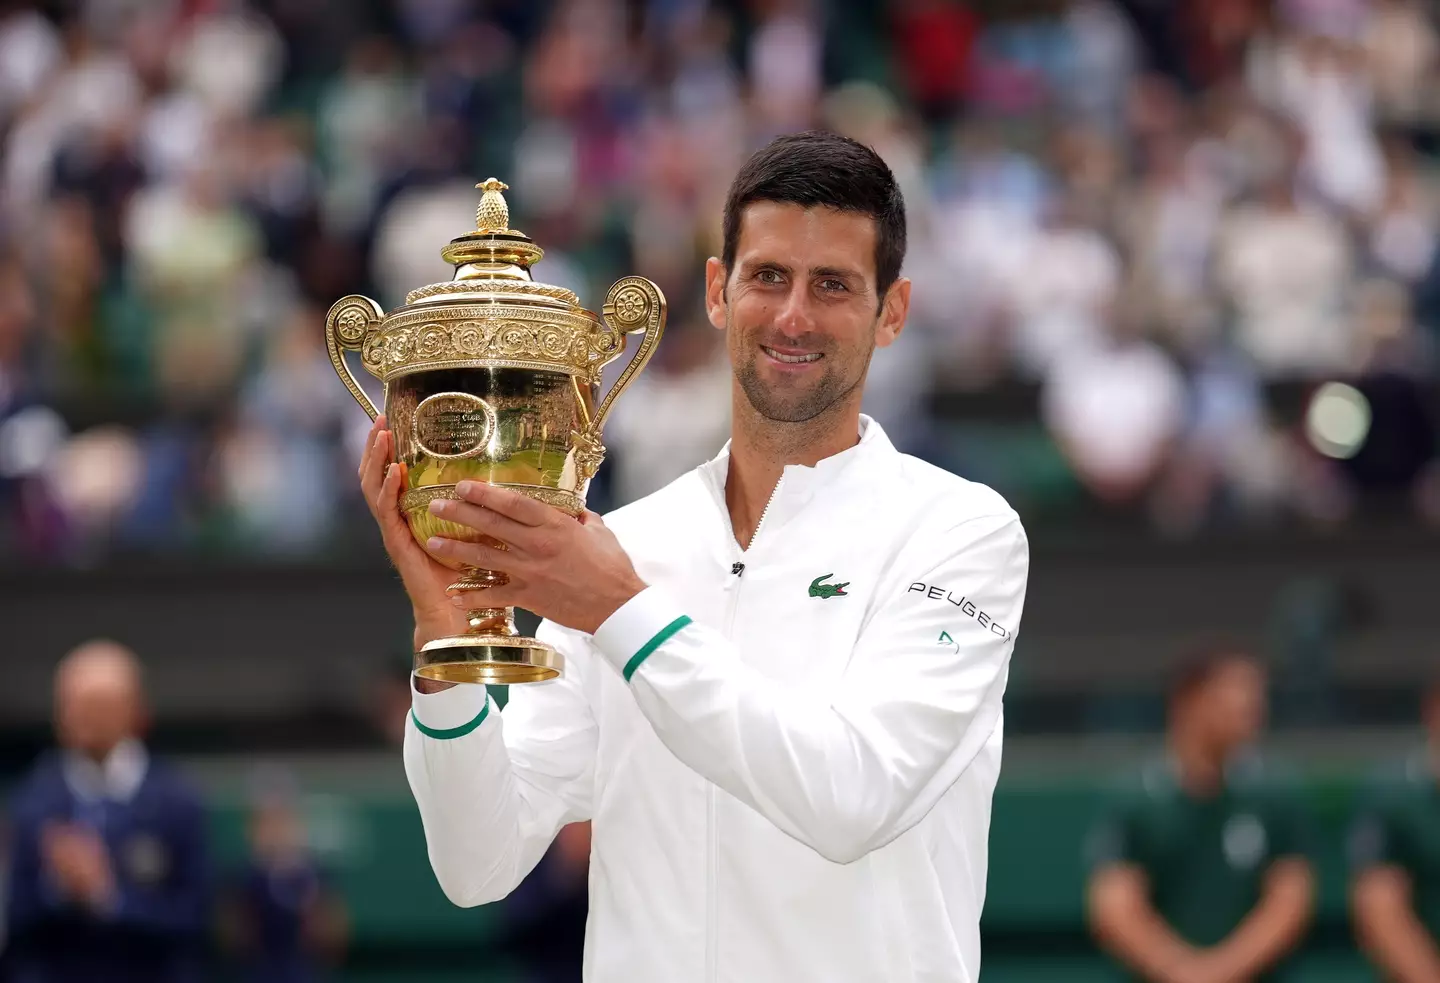 Djokovic with the Wimbledon trophy last year. Image: Alamy